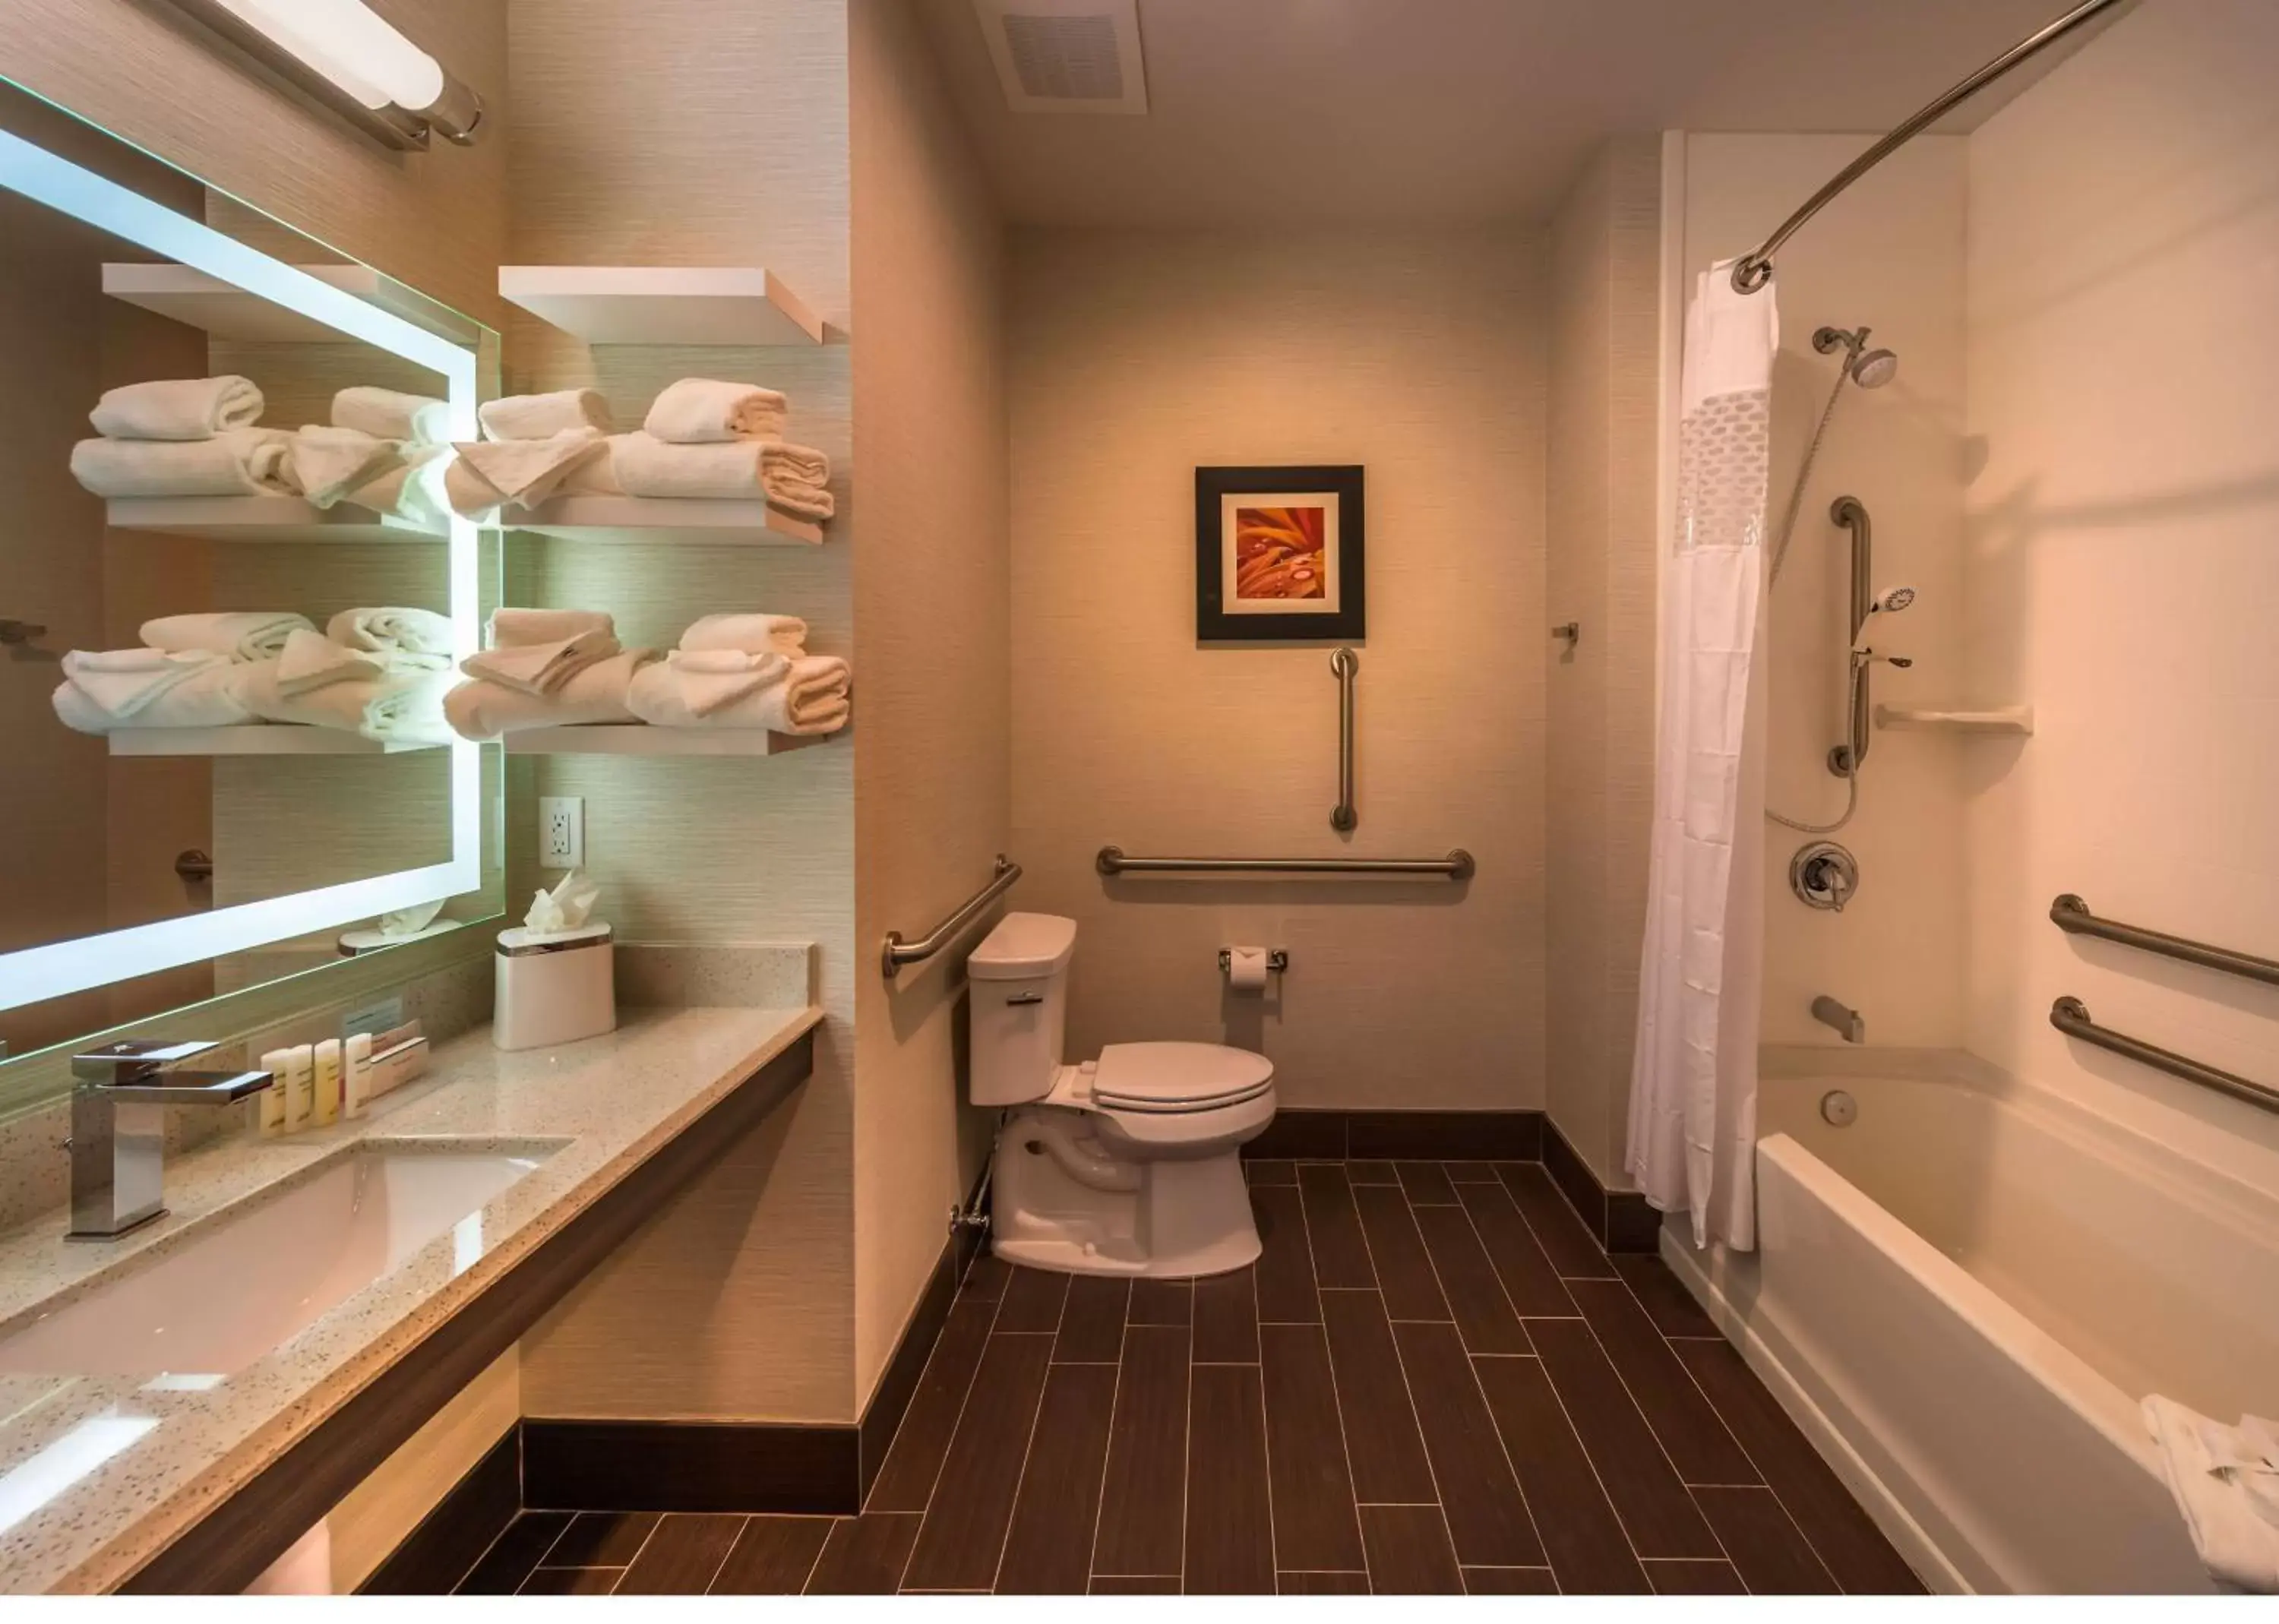 Bathroom in Hampton Inn & Suites - Reno West, NV